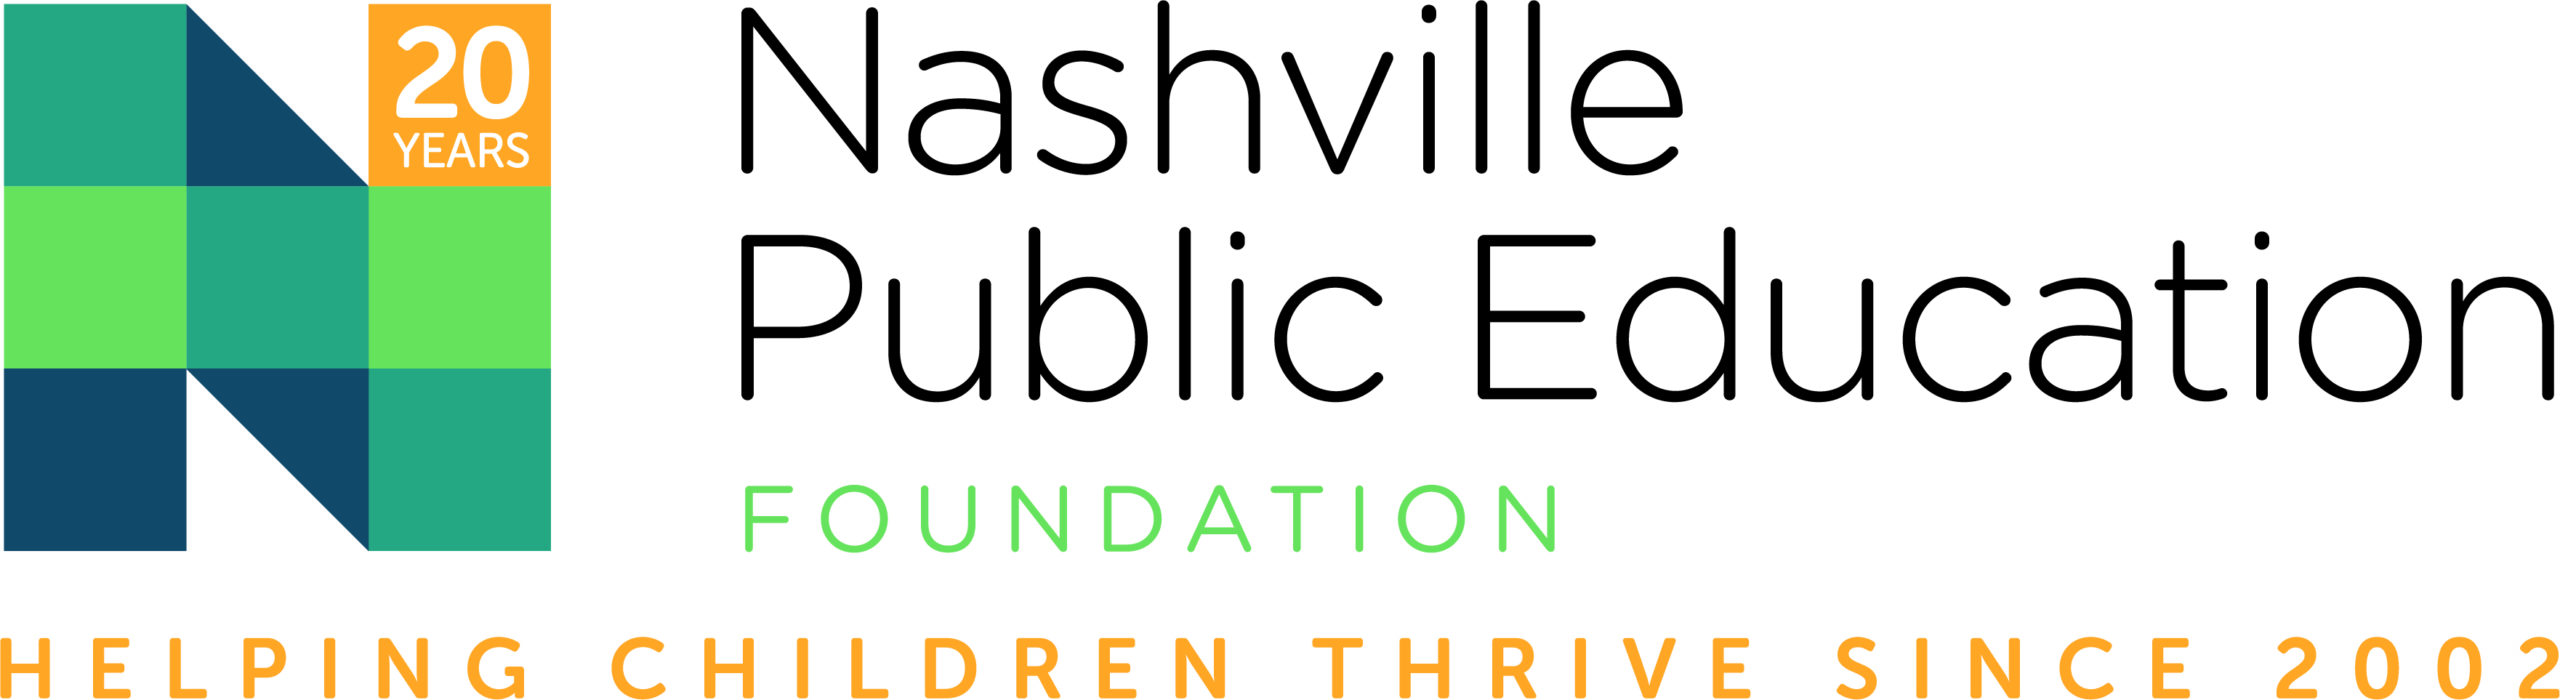 Nashville Public Education Foundation 20th Anniversary Logo